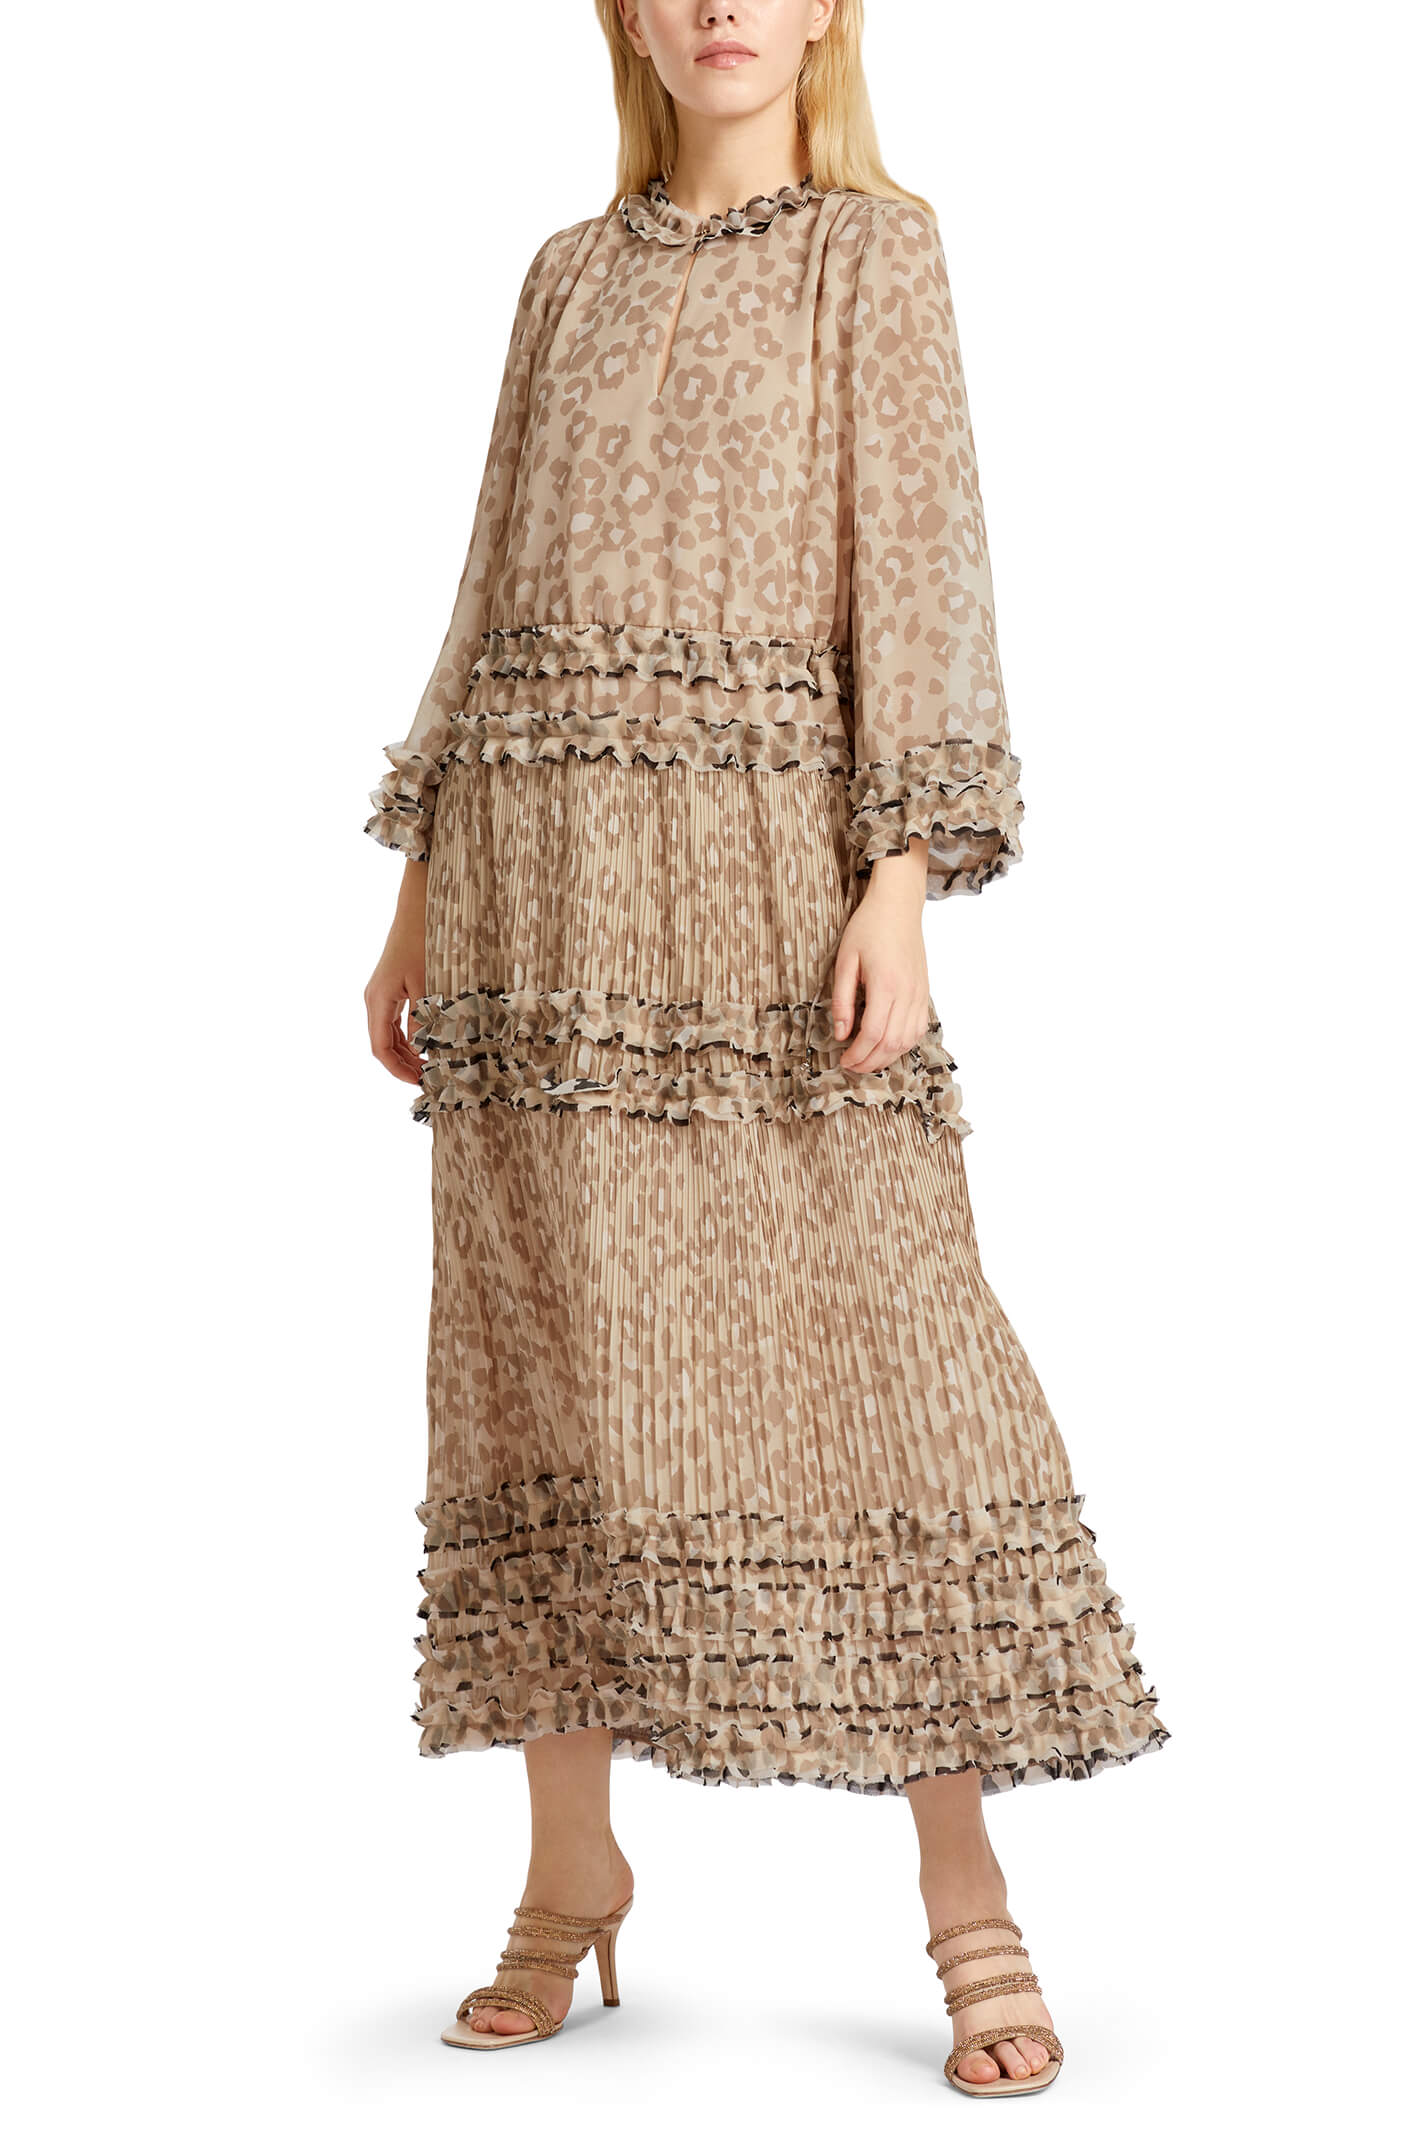 Olivia Cain 21.35 | Olivia Grace W36 Grace Marc Collection UC – Fashion Print Brown Dress Animal